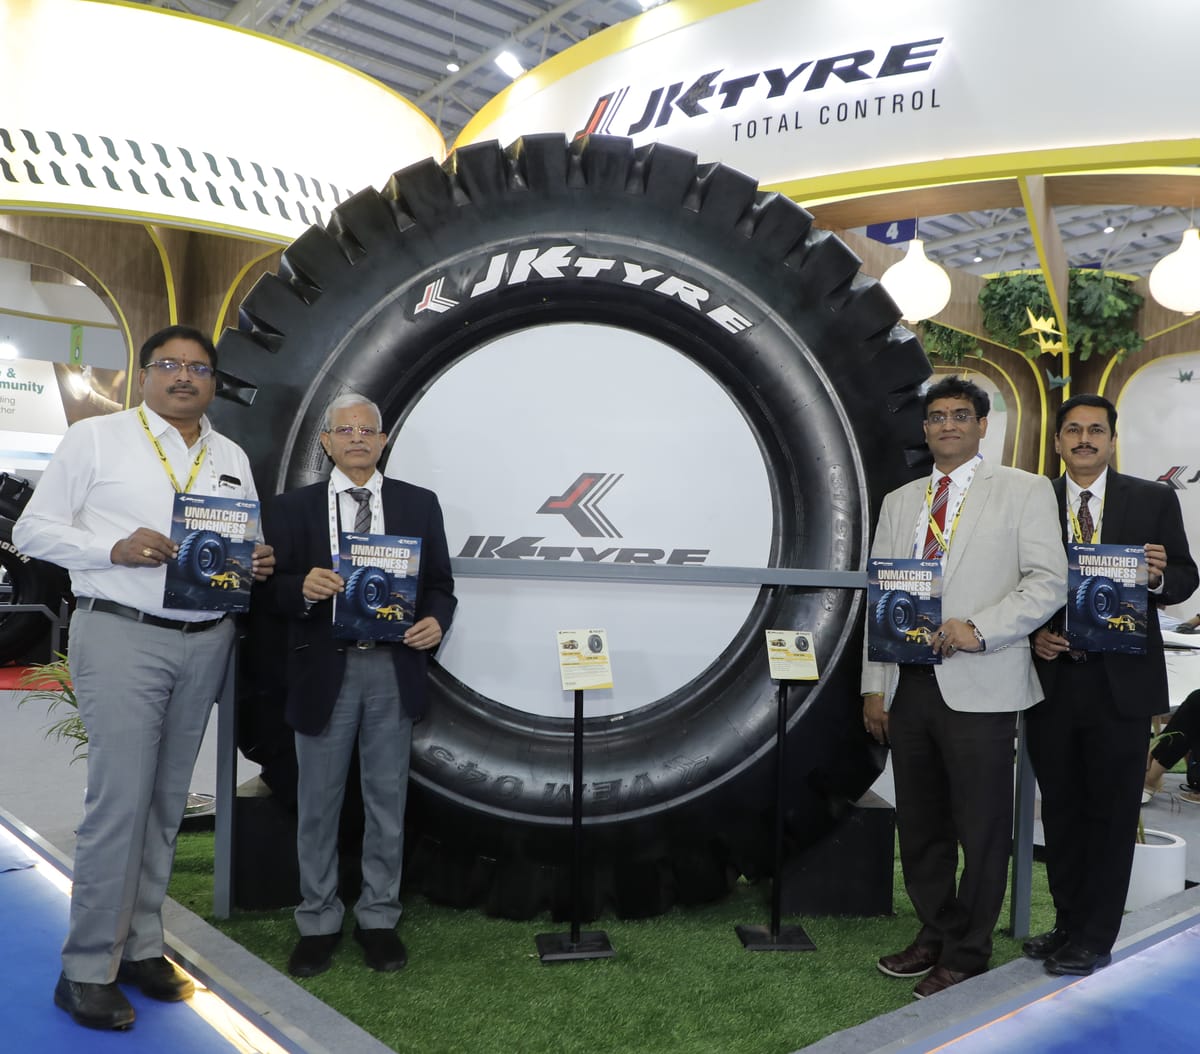 JK Tyre unveils innovative Tyre solutions in OTR segment